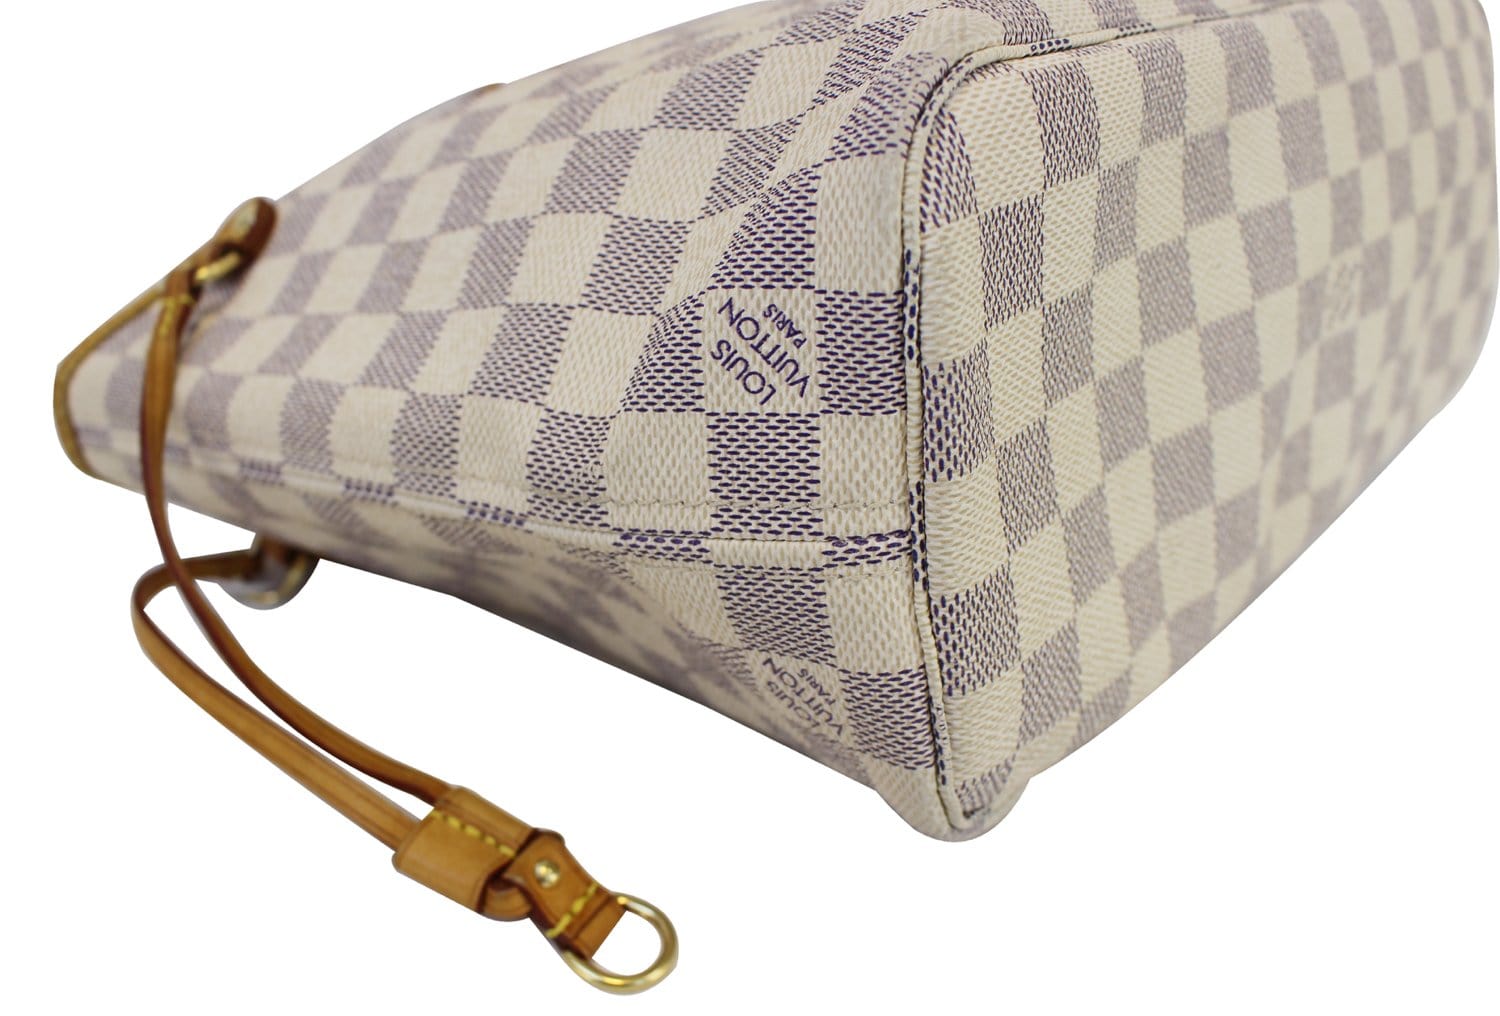 Louis Vuitton Damier Azur Neverfull PM Tote Shoulder Bag N51110 White  653789